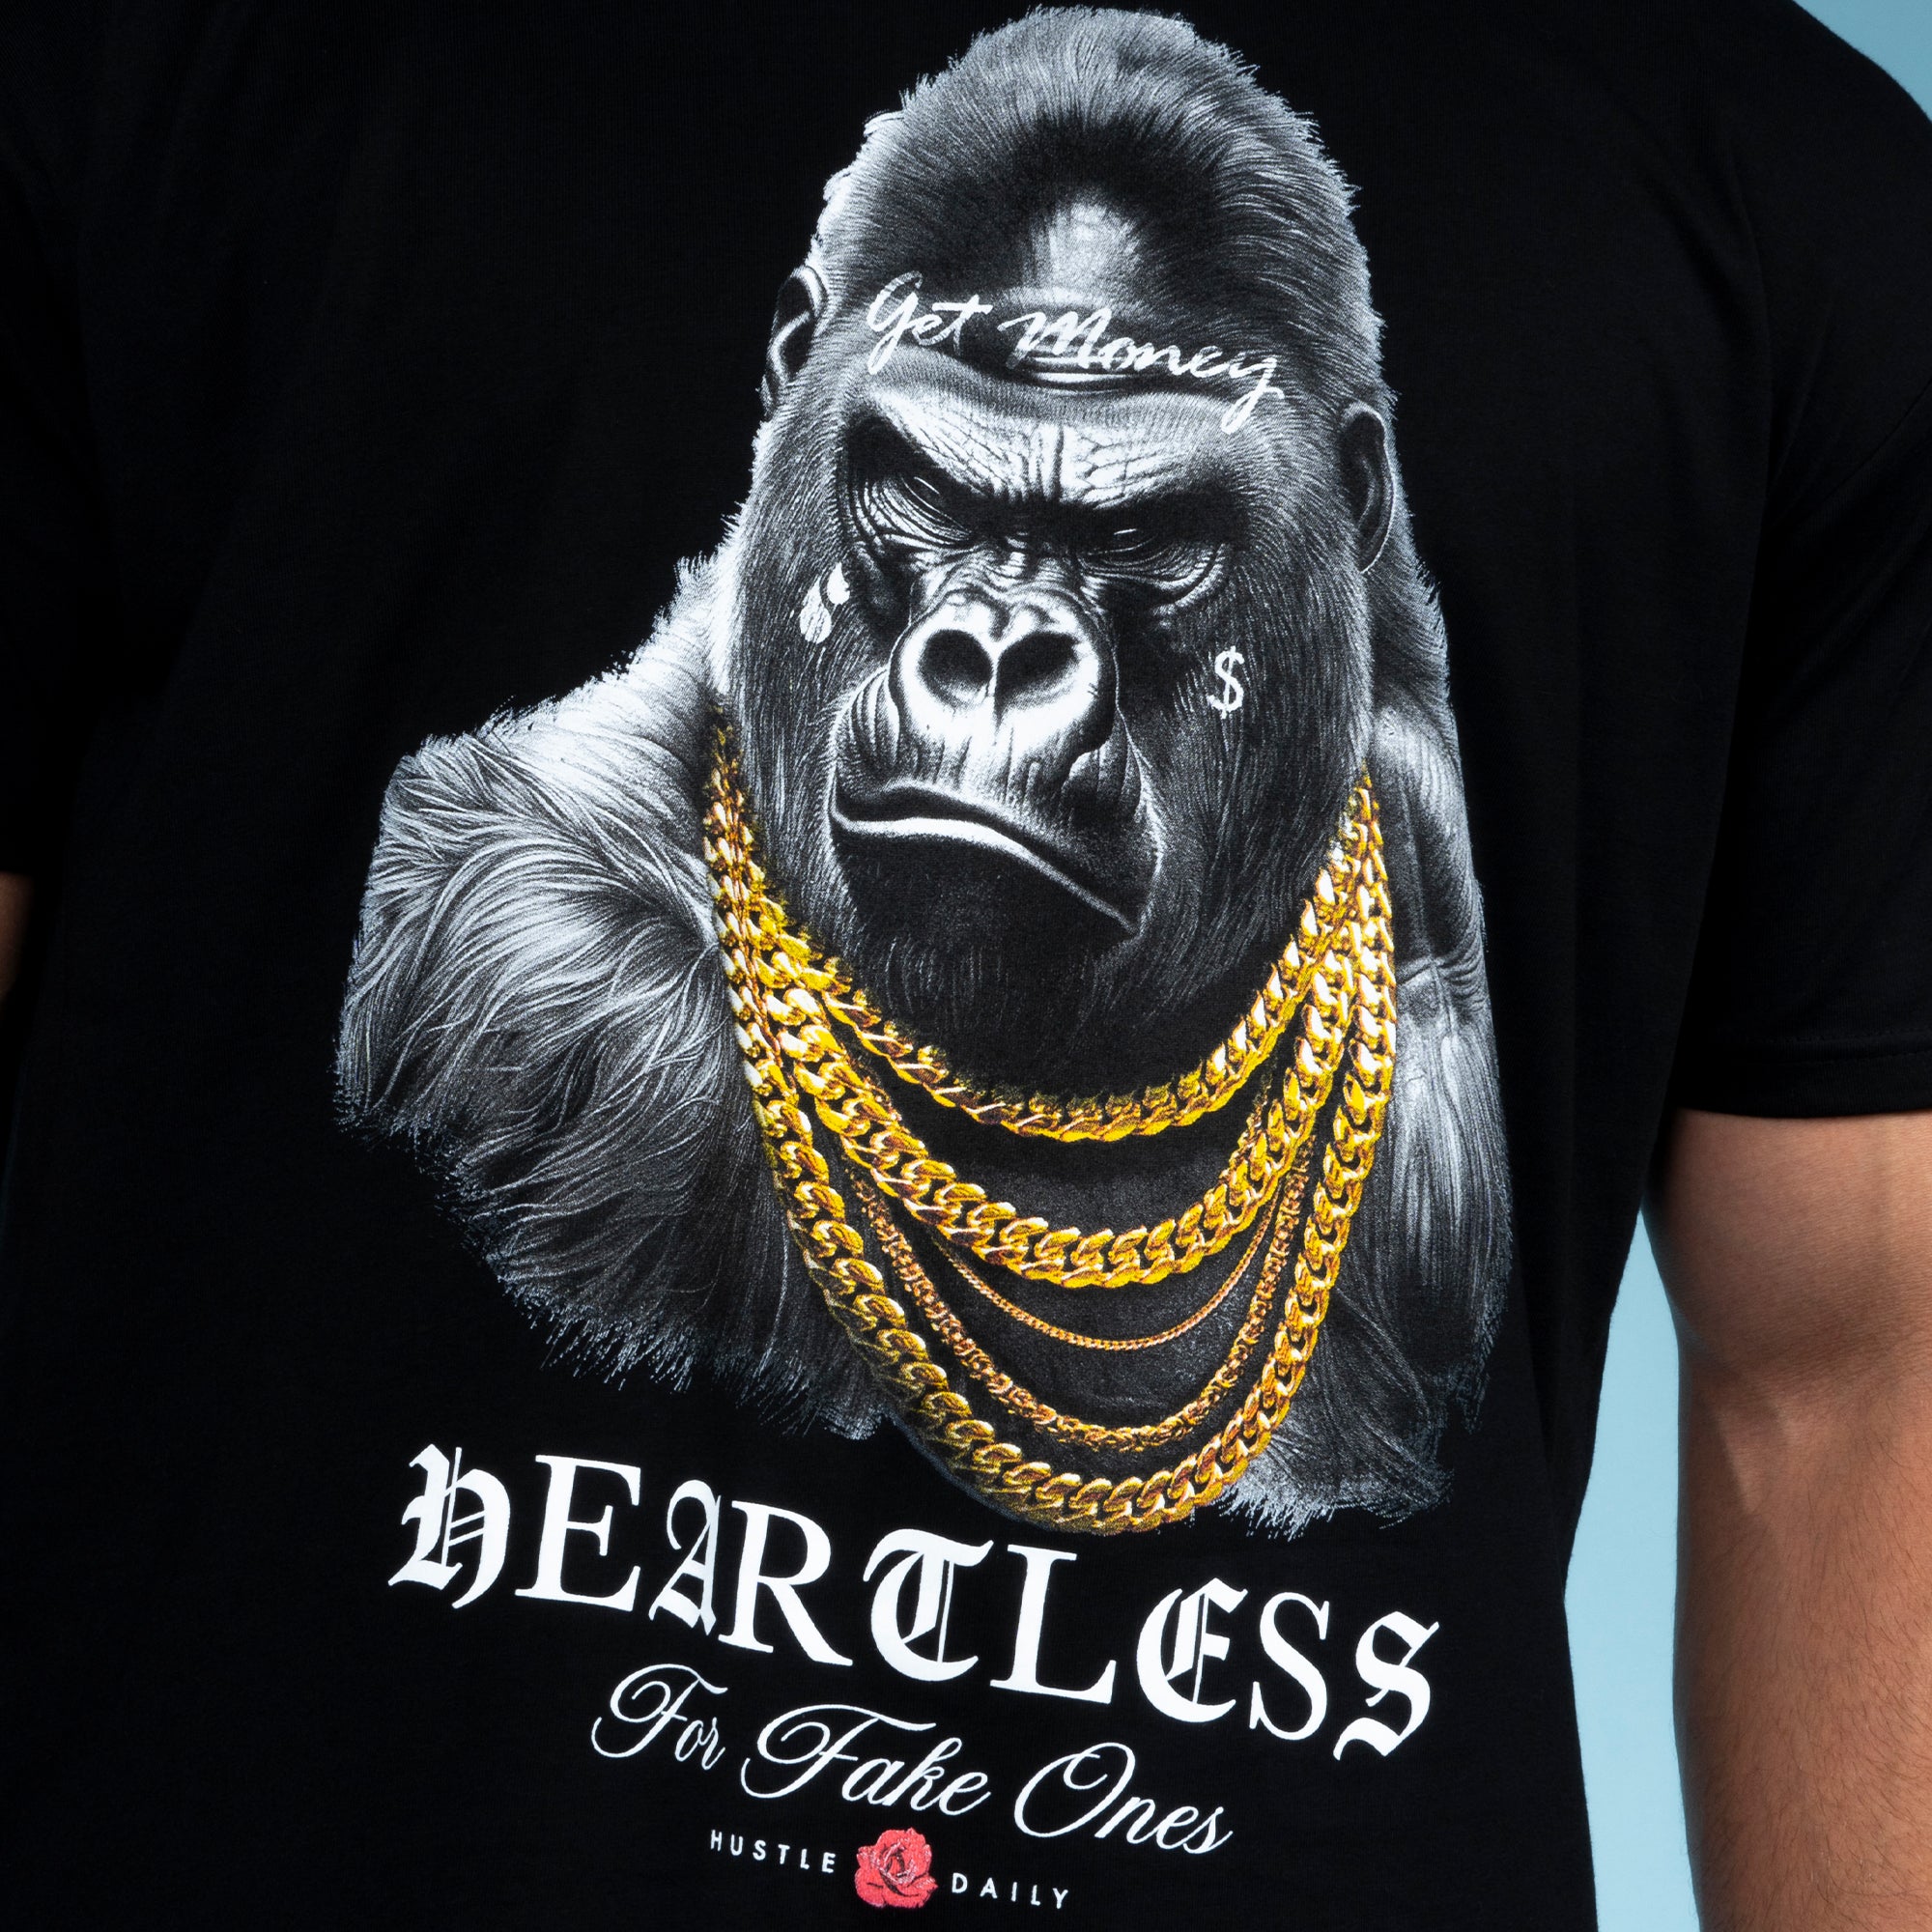 Gorilla Heartless